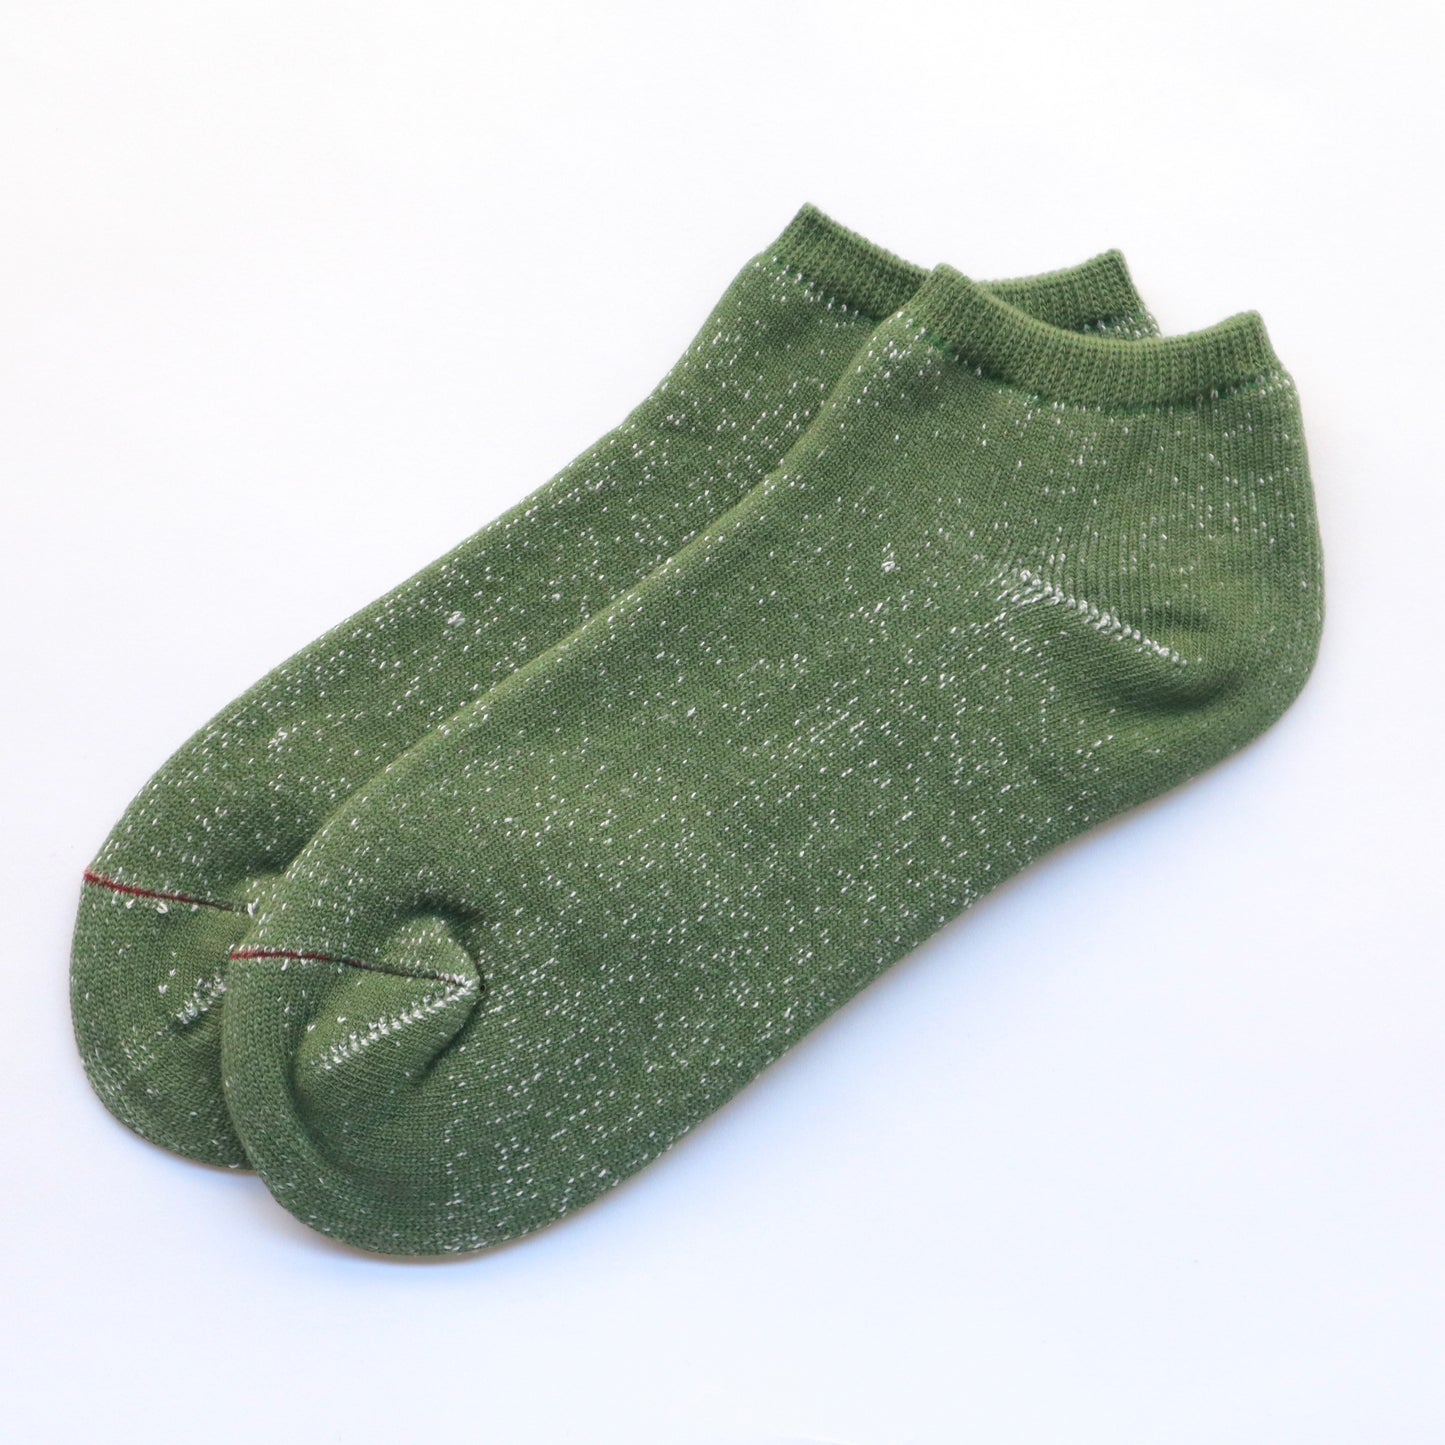 SUNNYSIDERS_ROTOTO_R1024 WASHI PILE SHORT SOCKS Olive Green_Socks